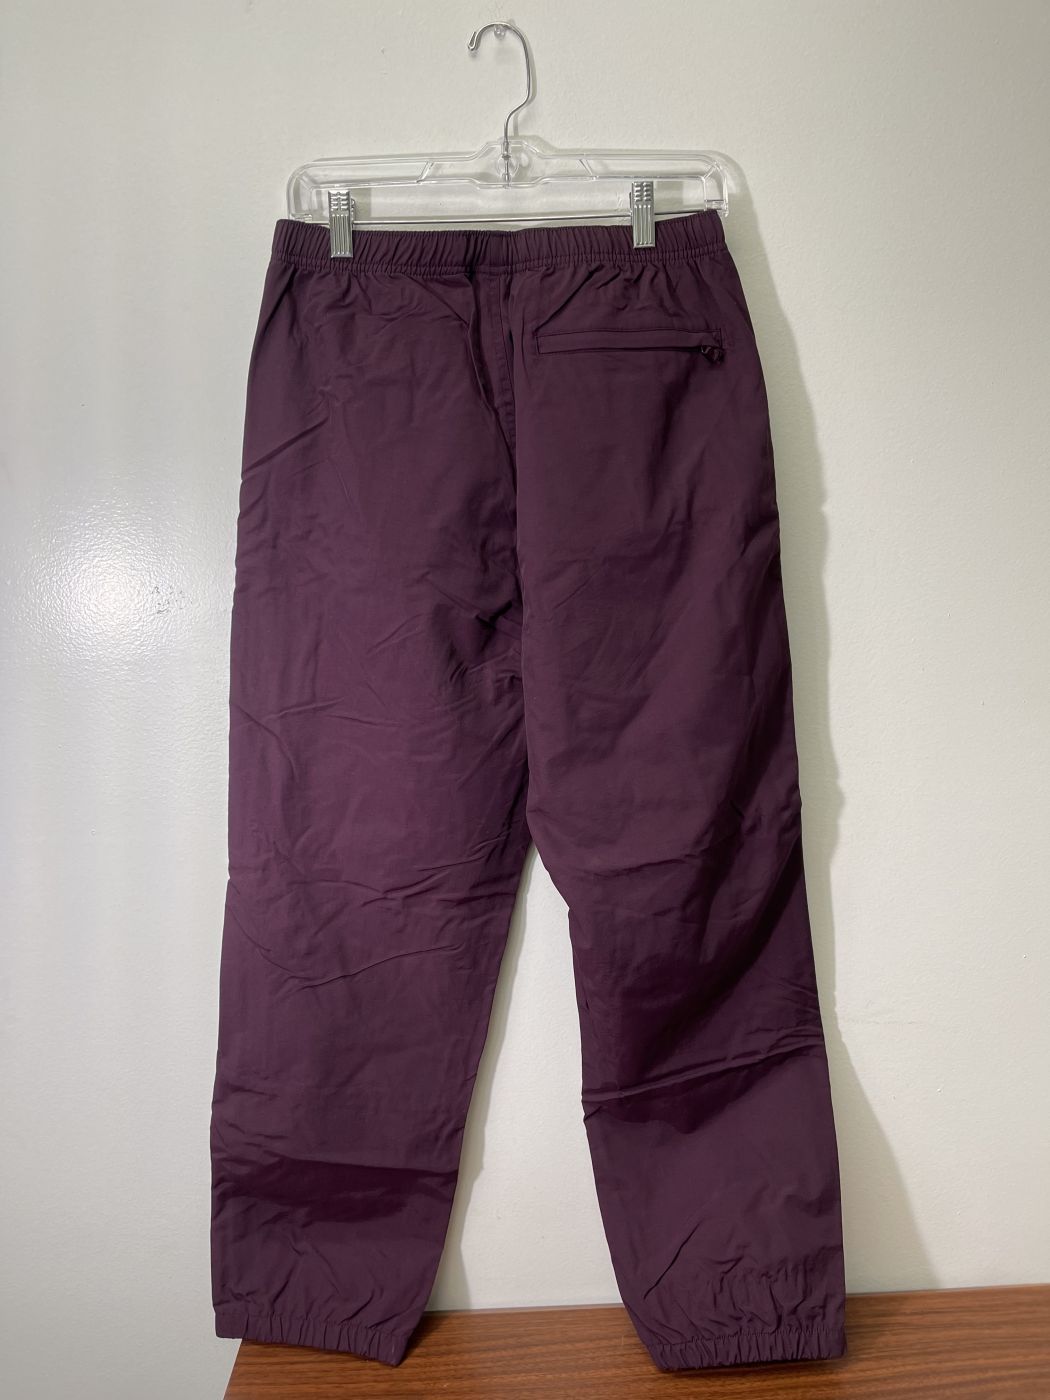 Supreme Reflective Zip Pants Purple Small SUPR-238218